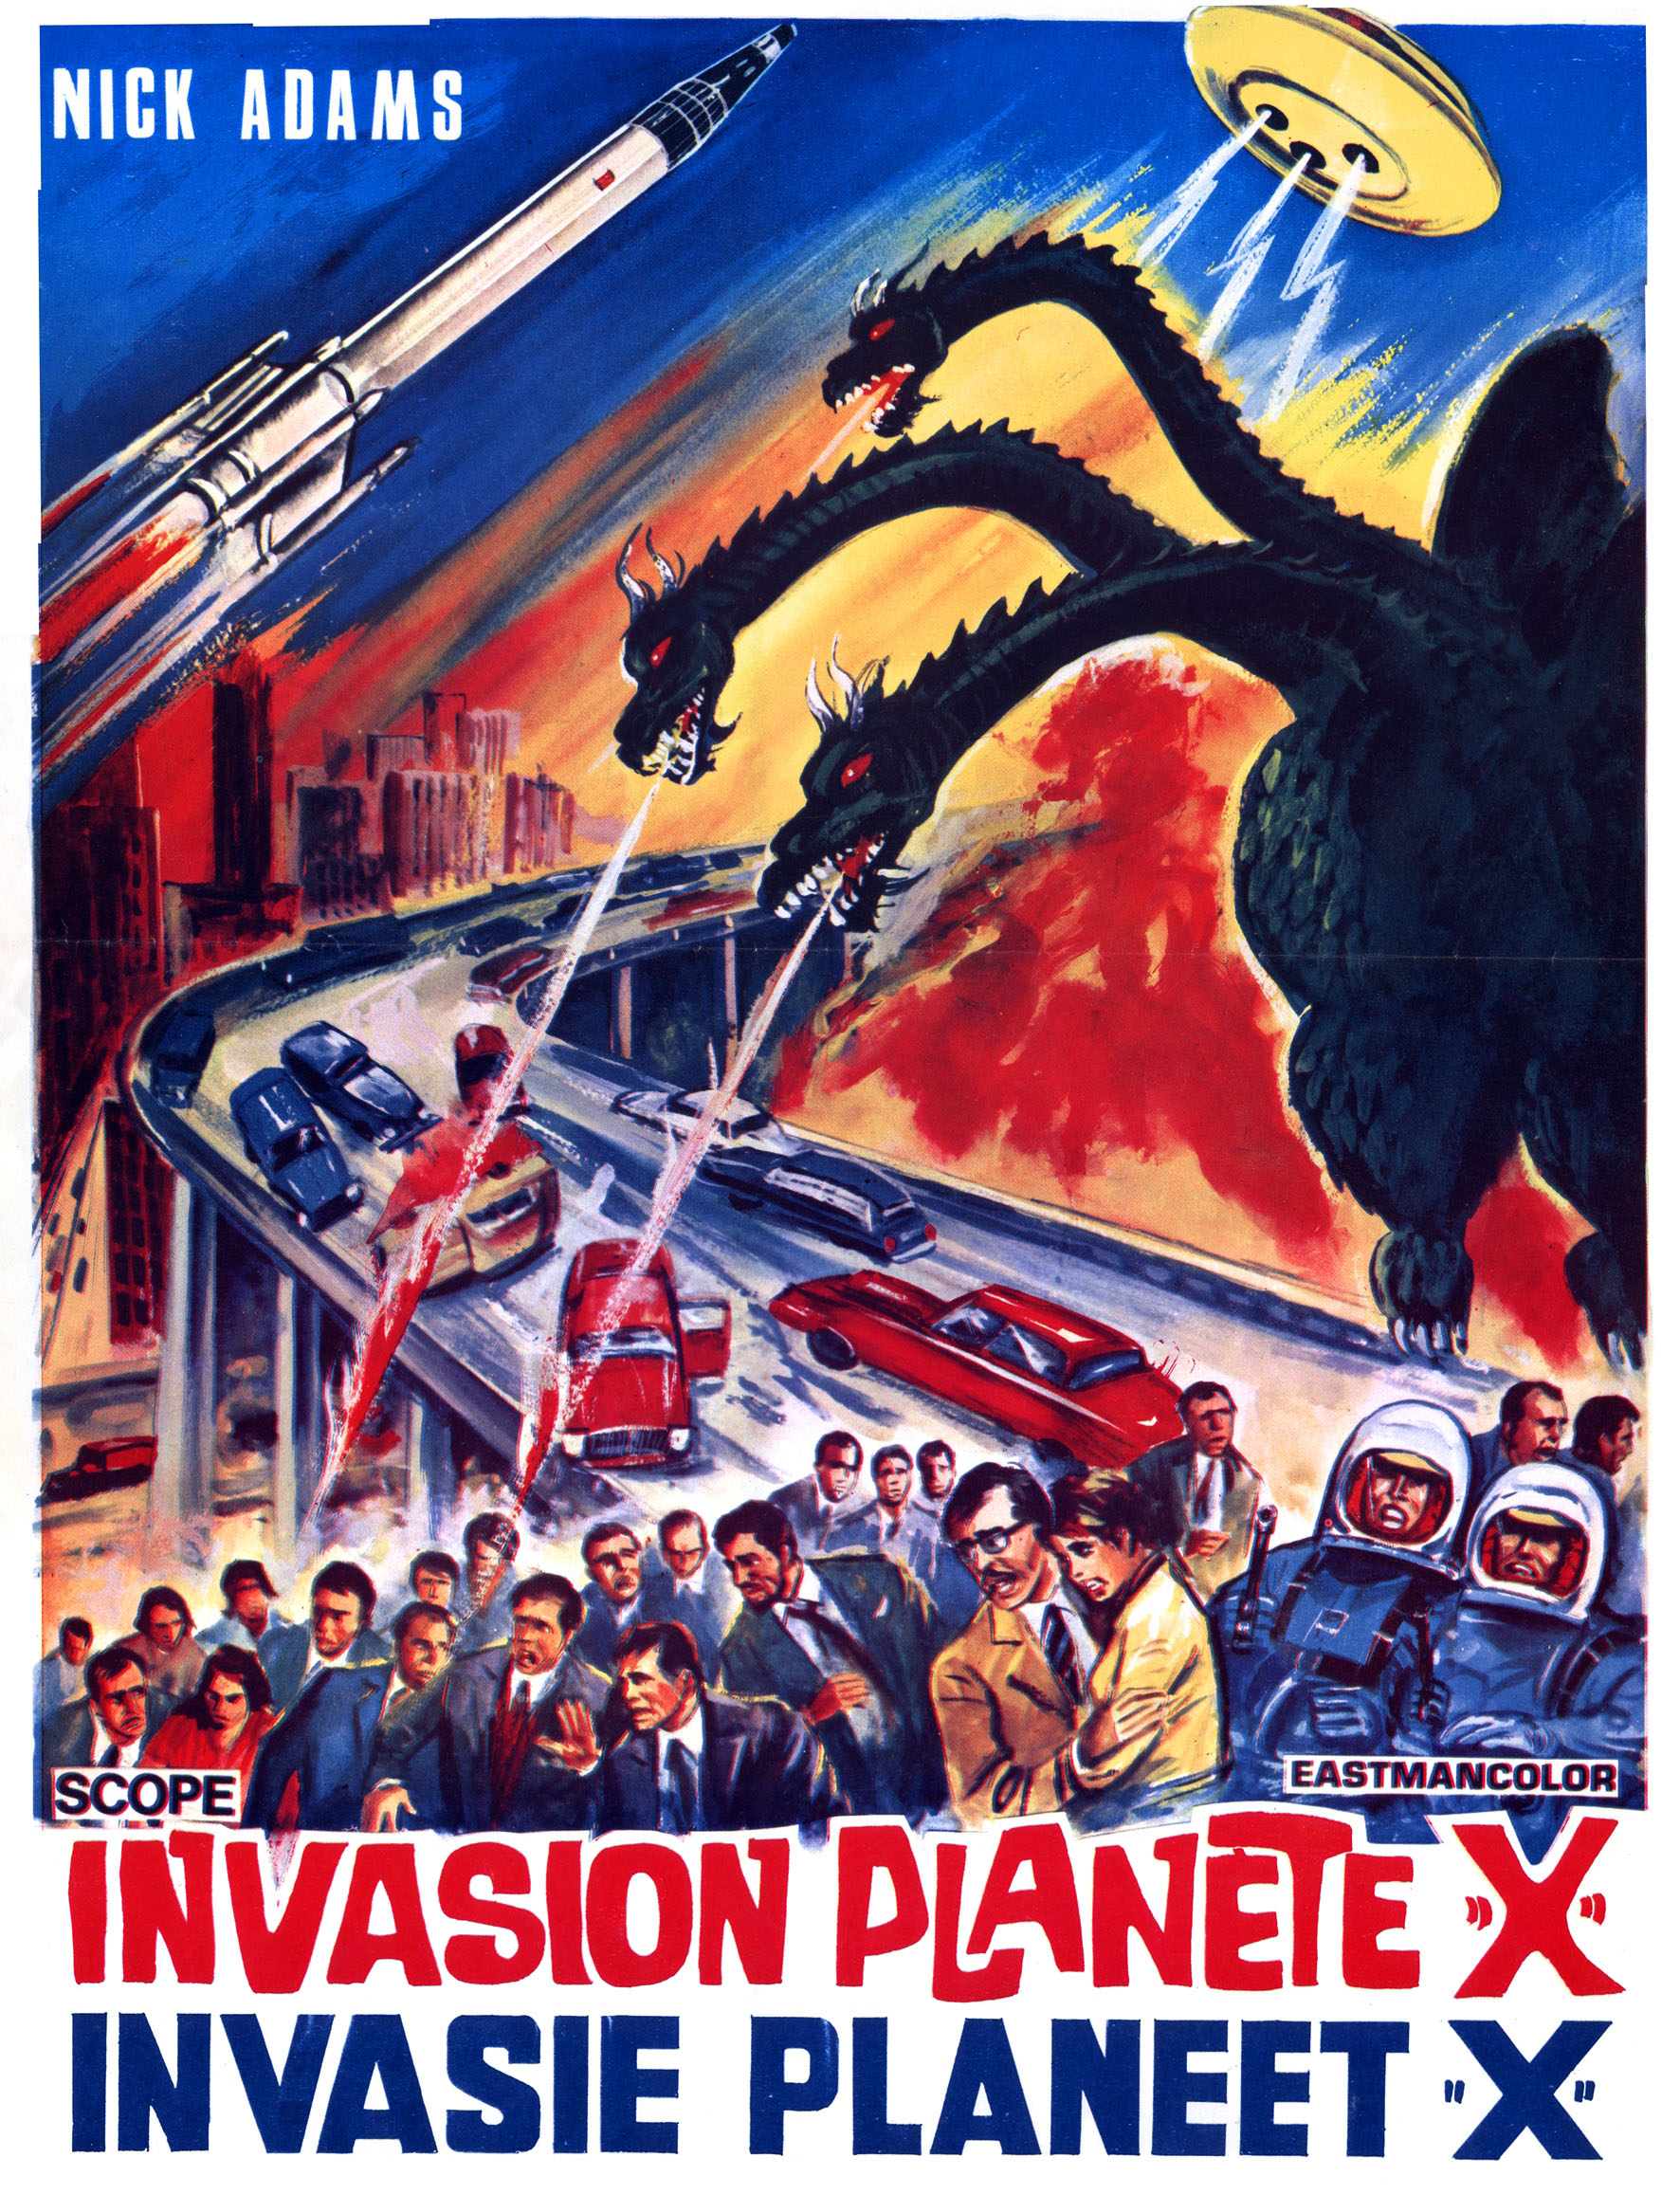 Godzilla vs. Monster Zero (1965)